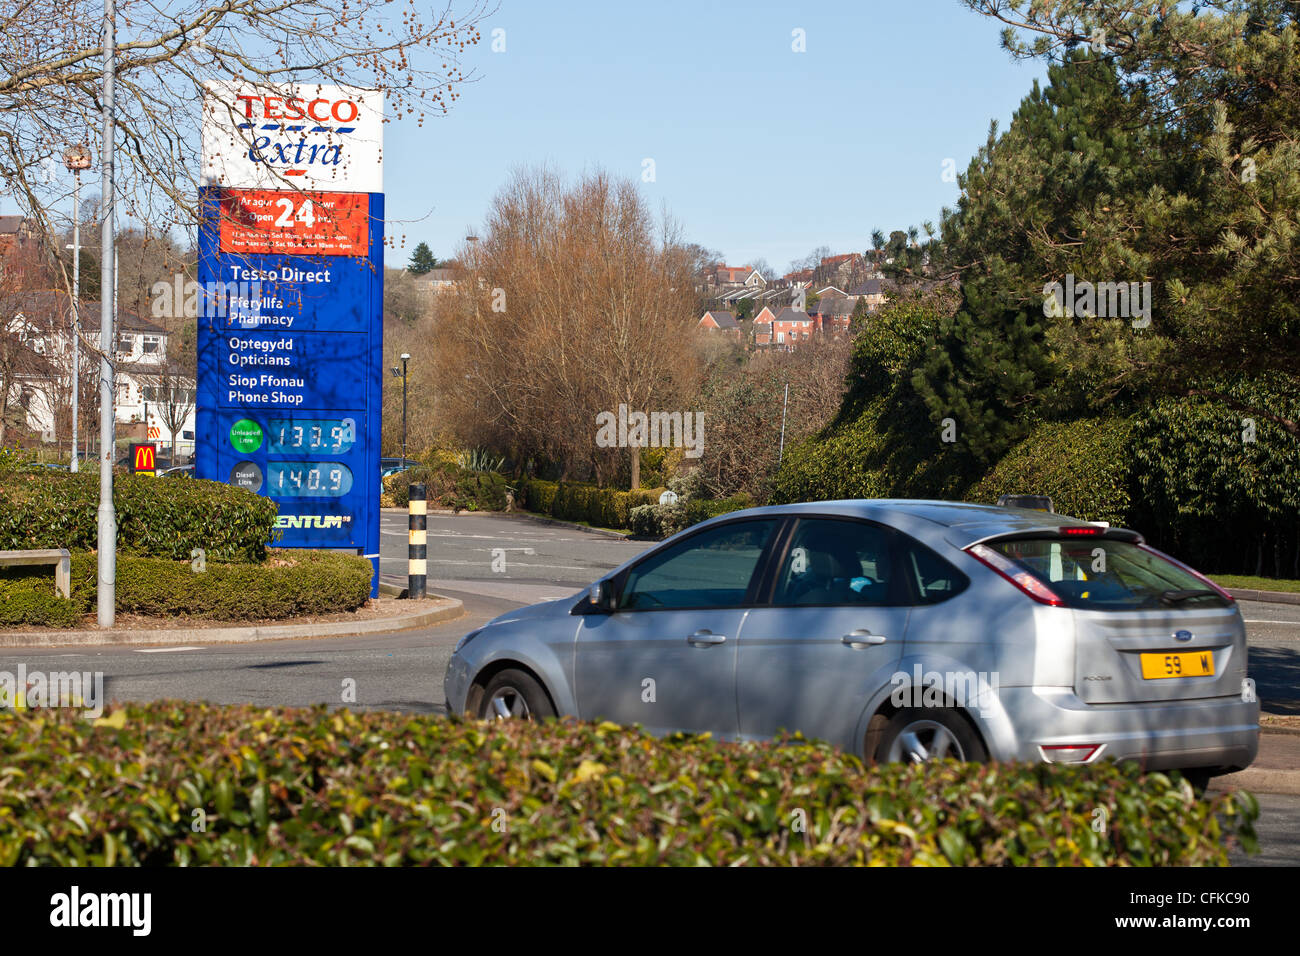 tesco extra petrol station sign. Stock Photo